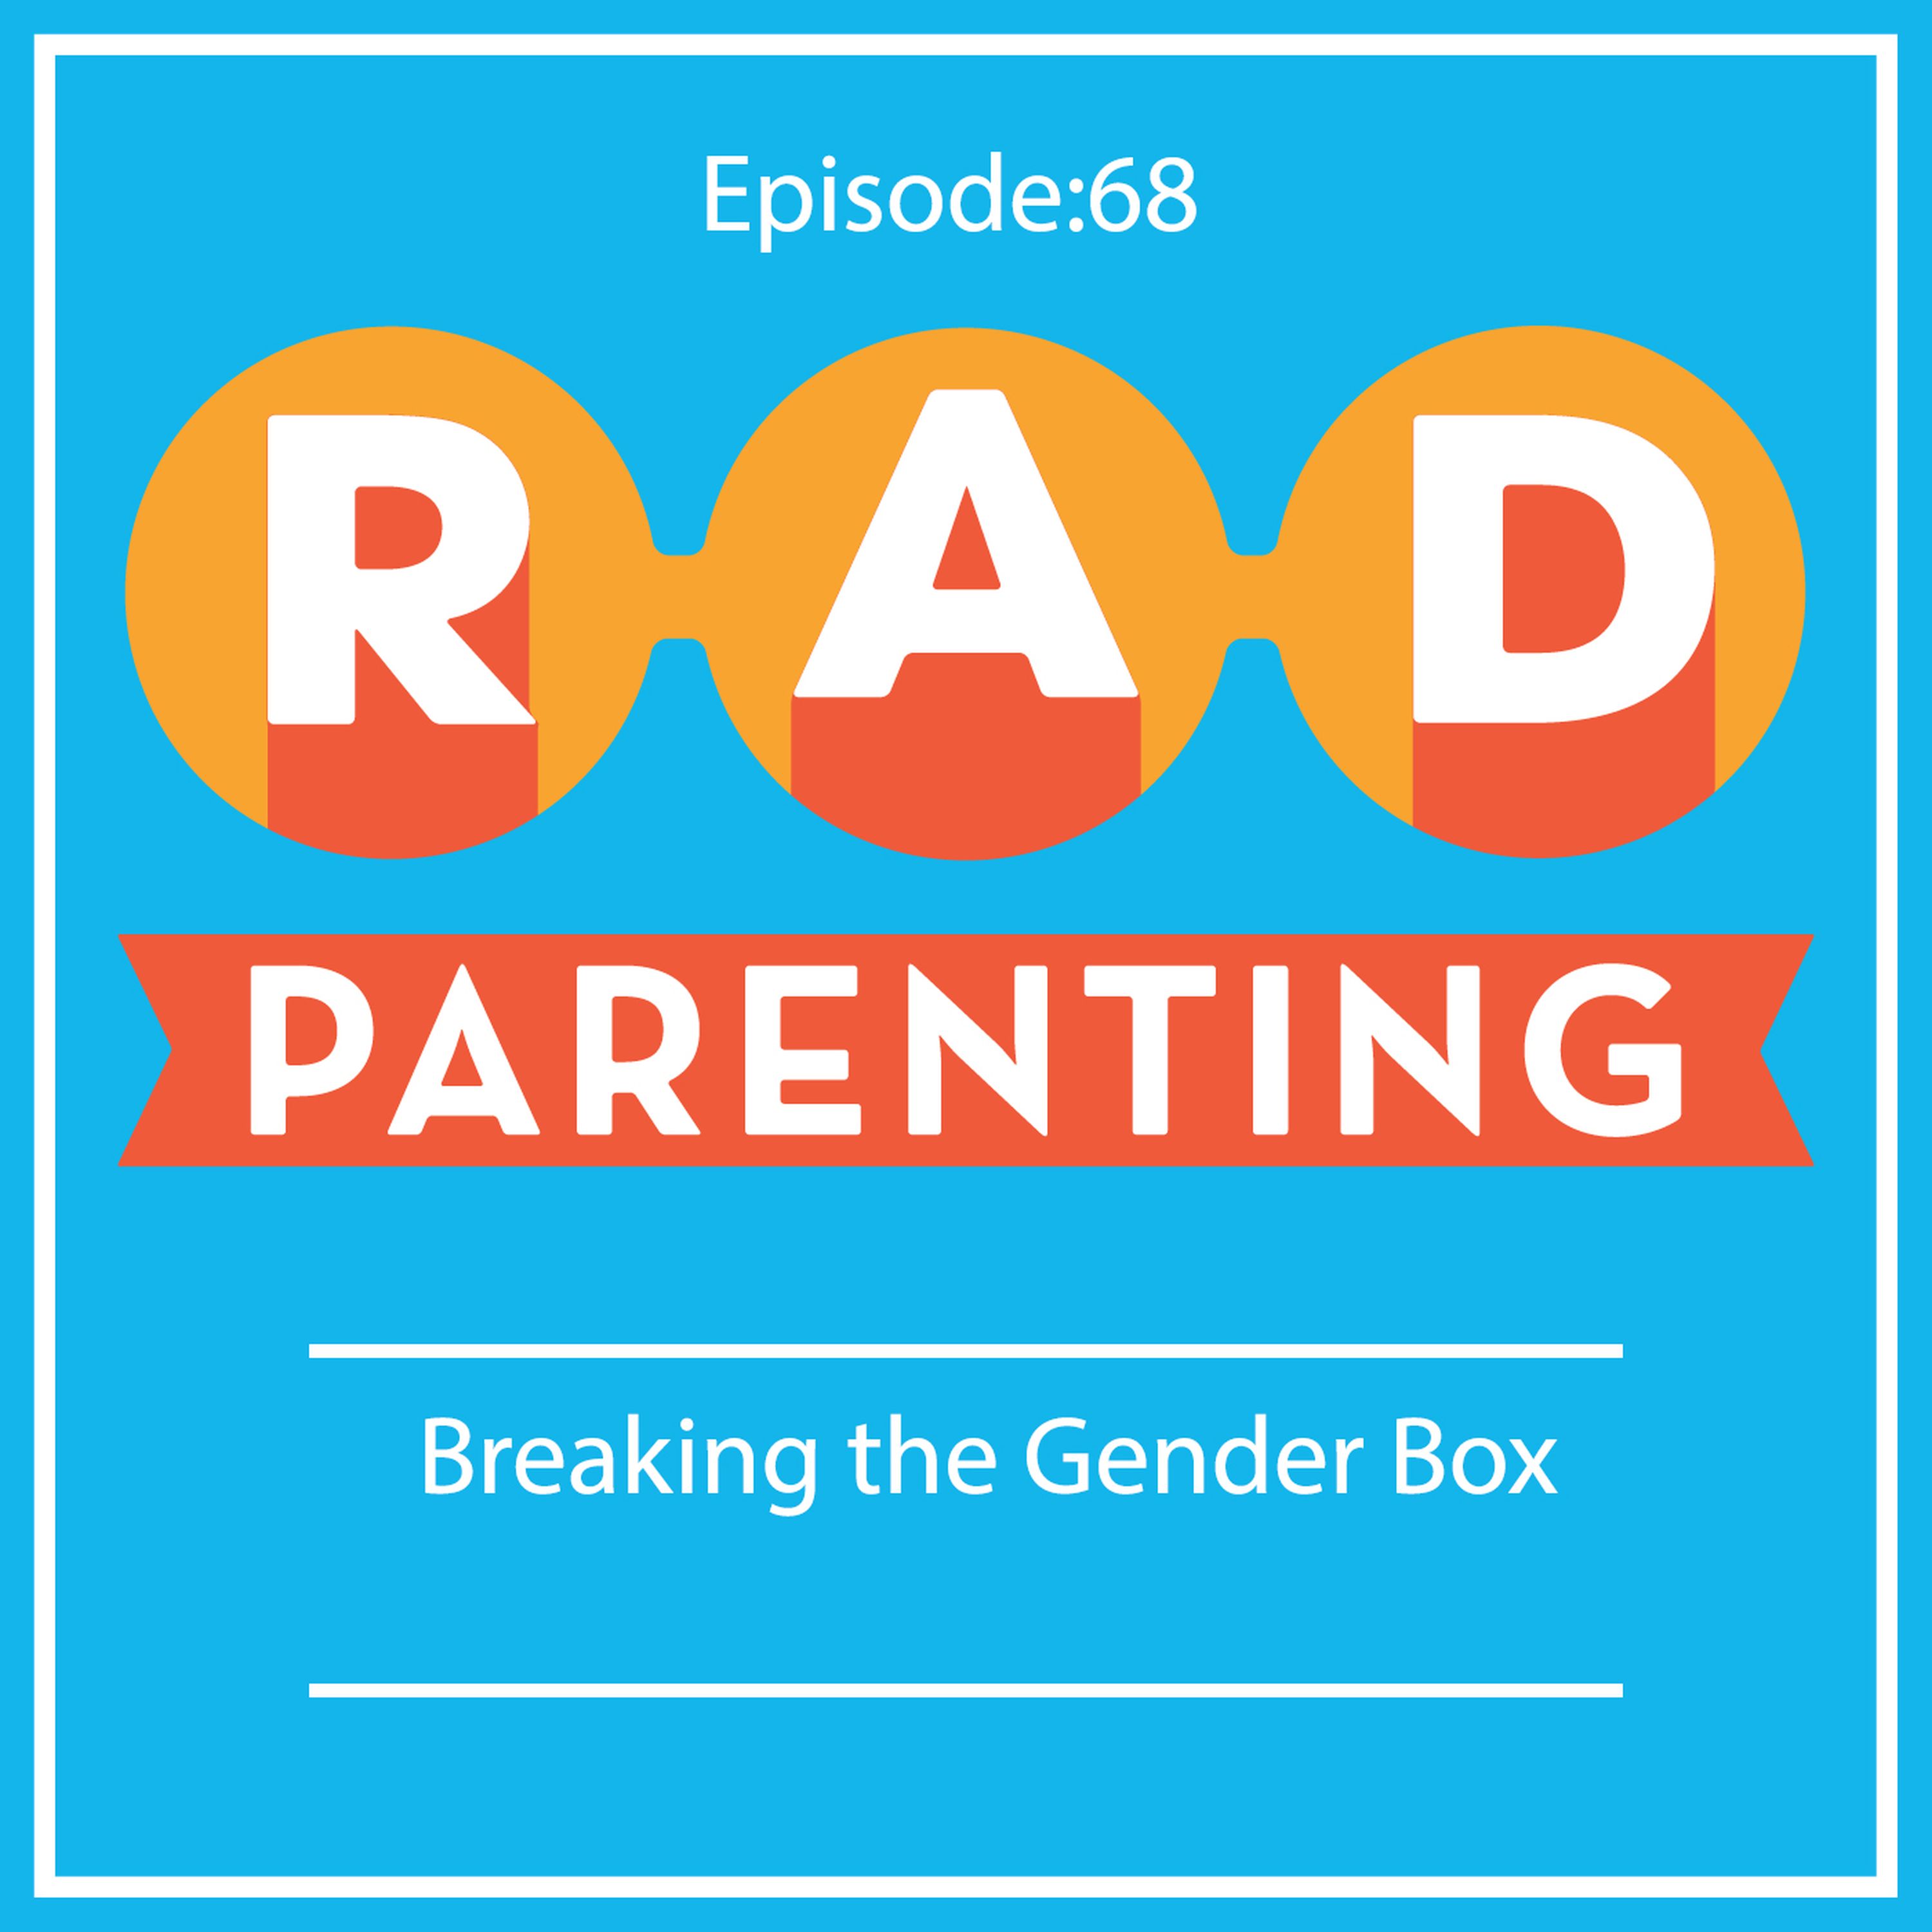 Breaking the Gender Box